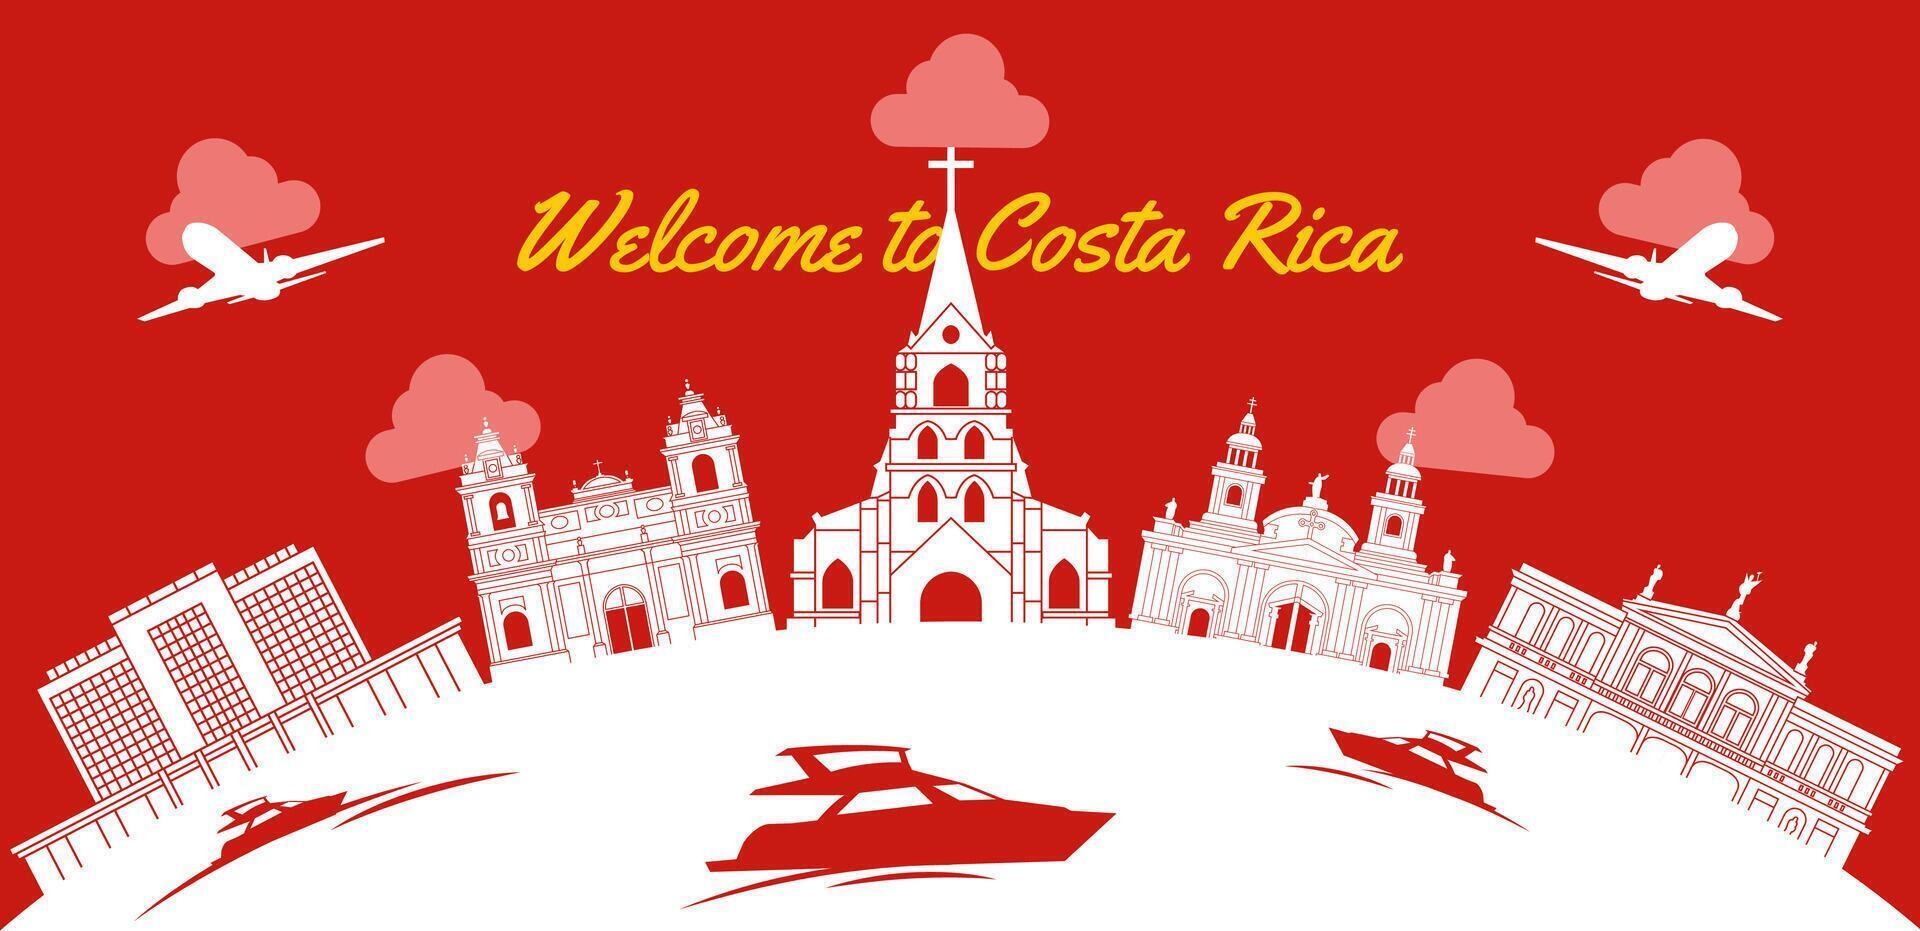 Costa Rica famous landmark silhouette style vector